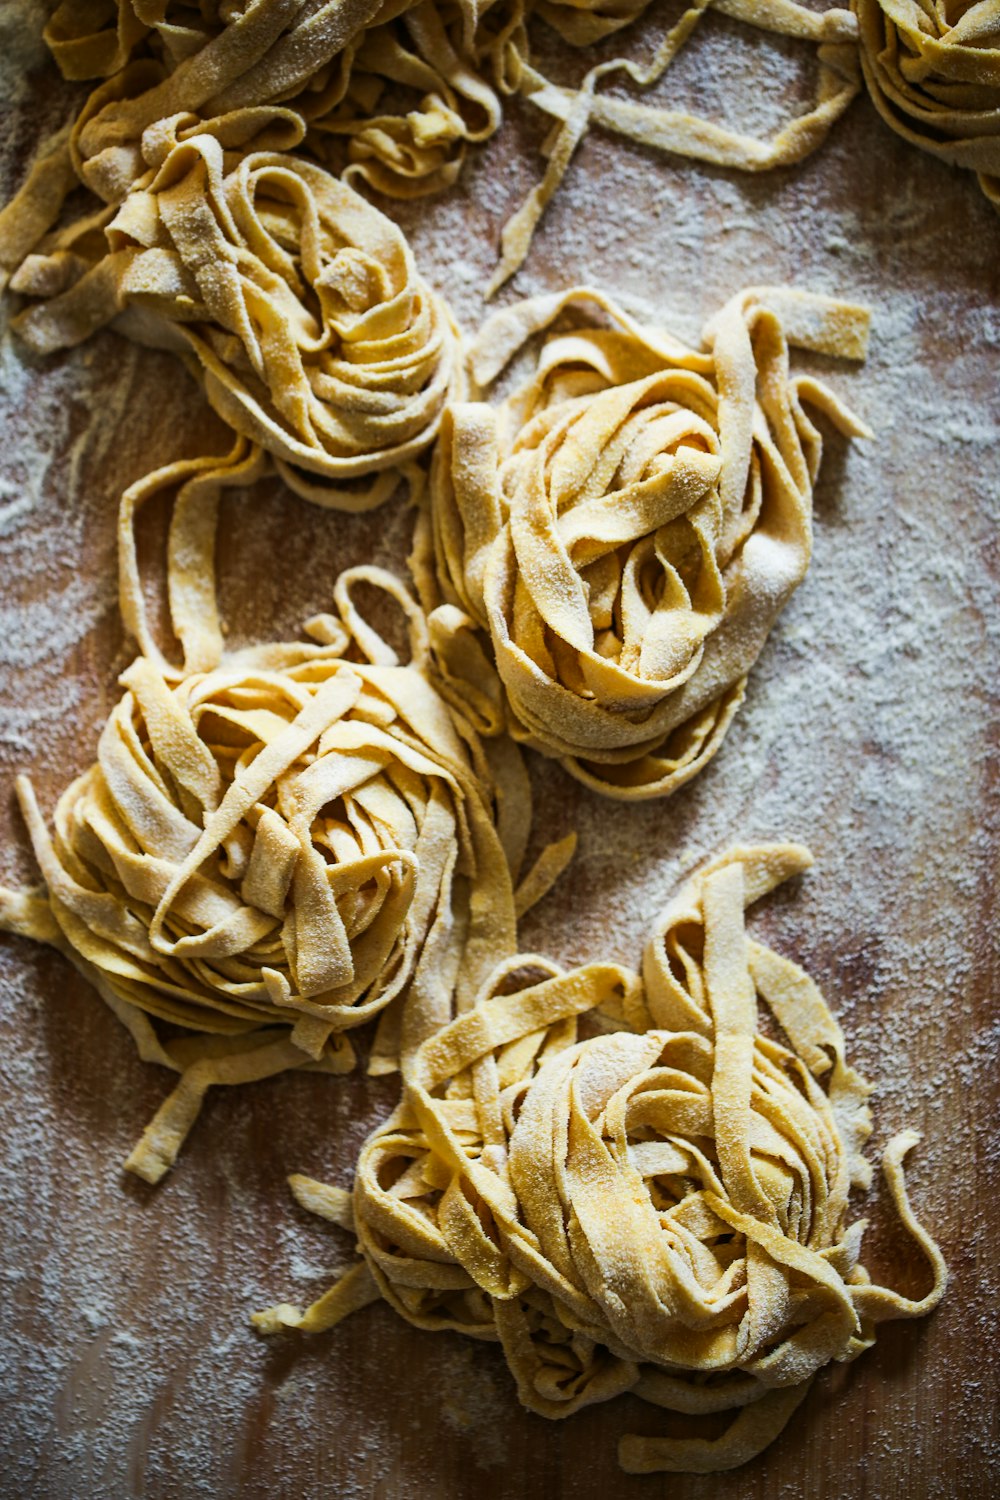 raw pasta